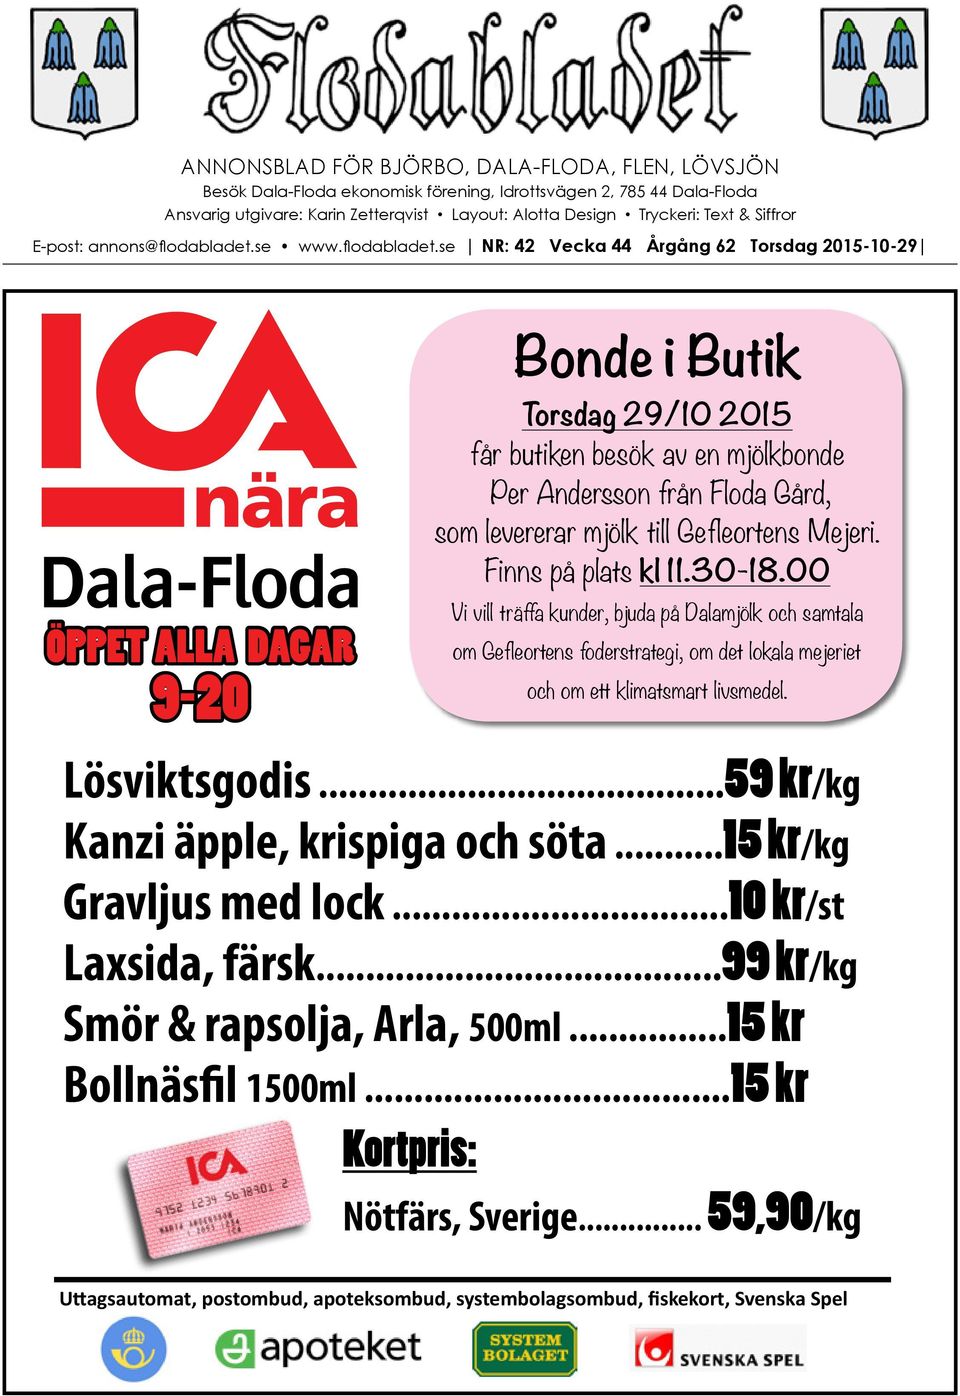 se www.flodabladet.